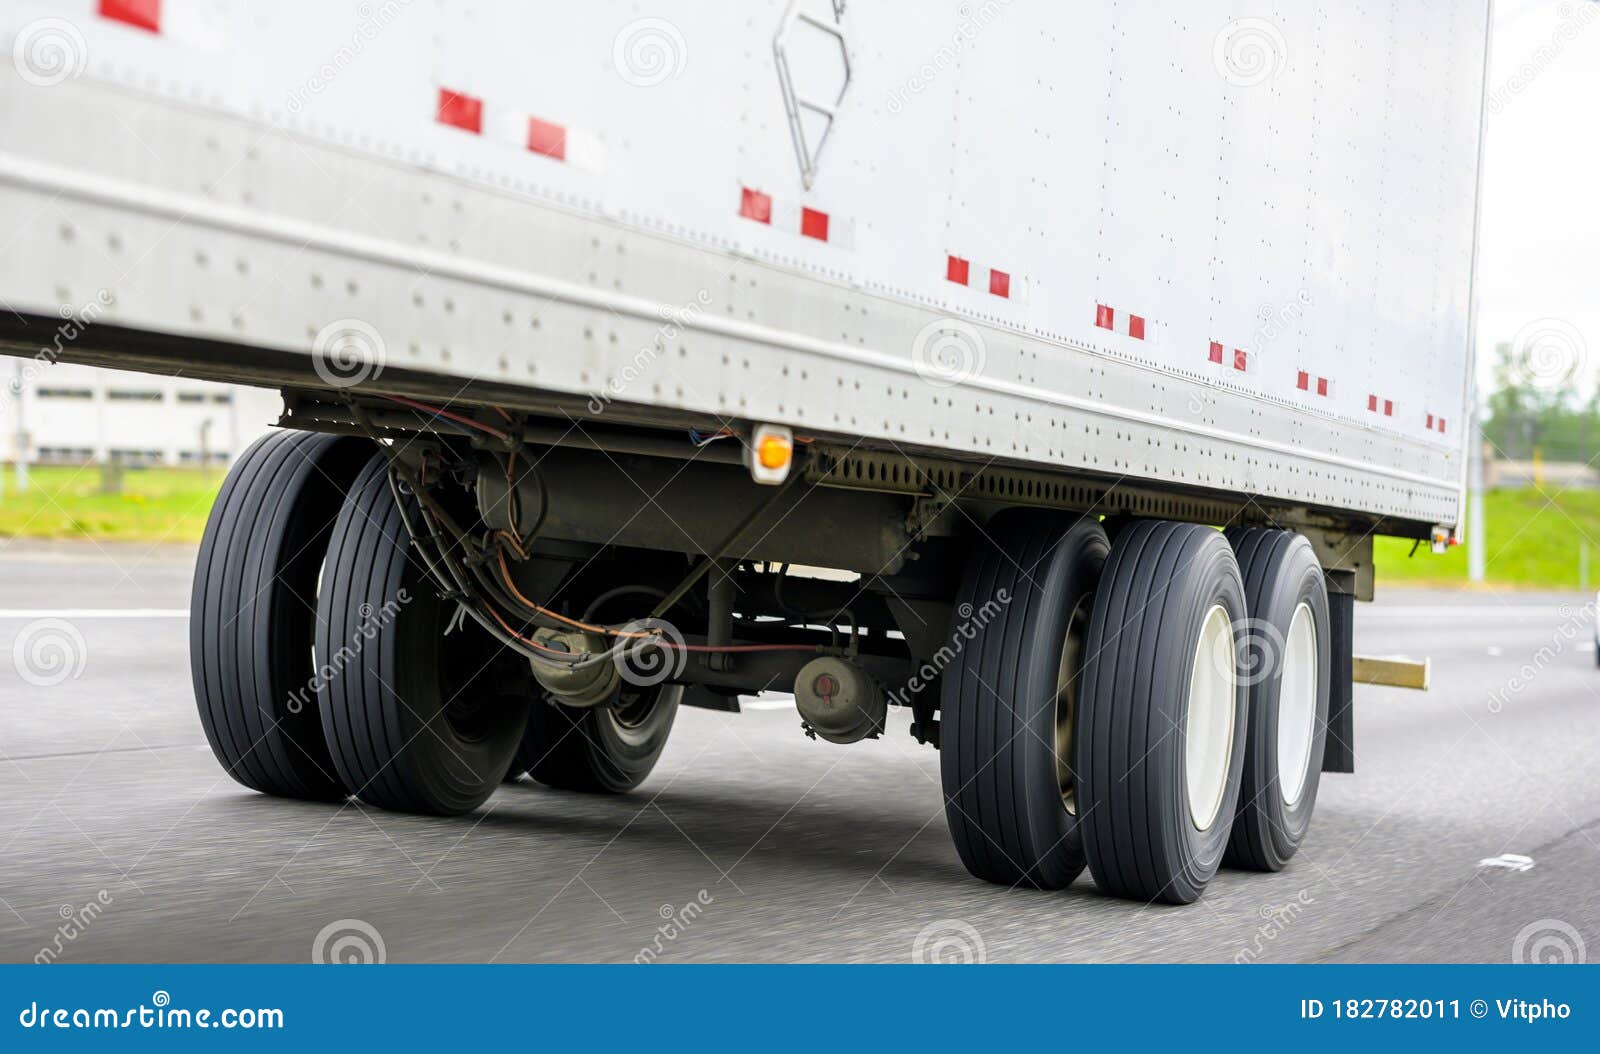 & Large Vehicle Tires Fits 32-34.5 Diameter Wheels Smart Design RV Wheel Covers White w/ Felt Semi Trucks Model 4 Trailer Protects Against Rust & Outside Storage Damage 2-Pack Travel